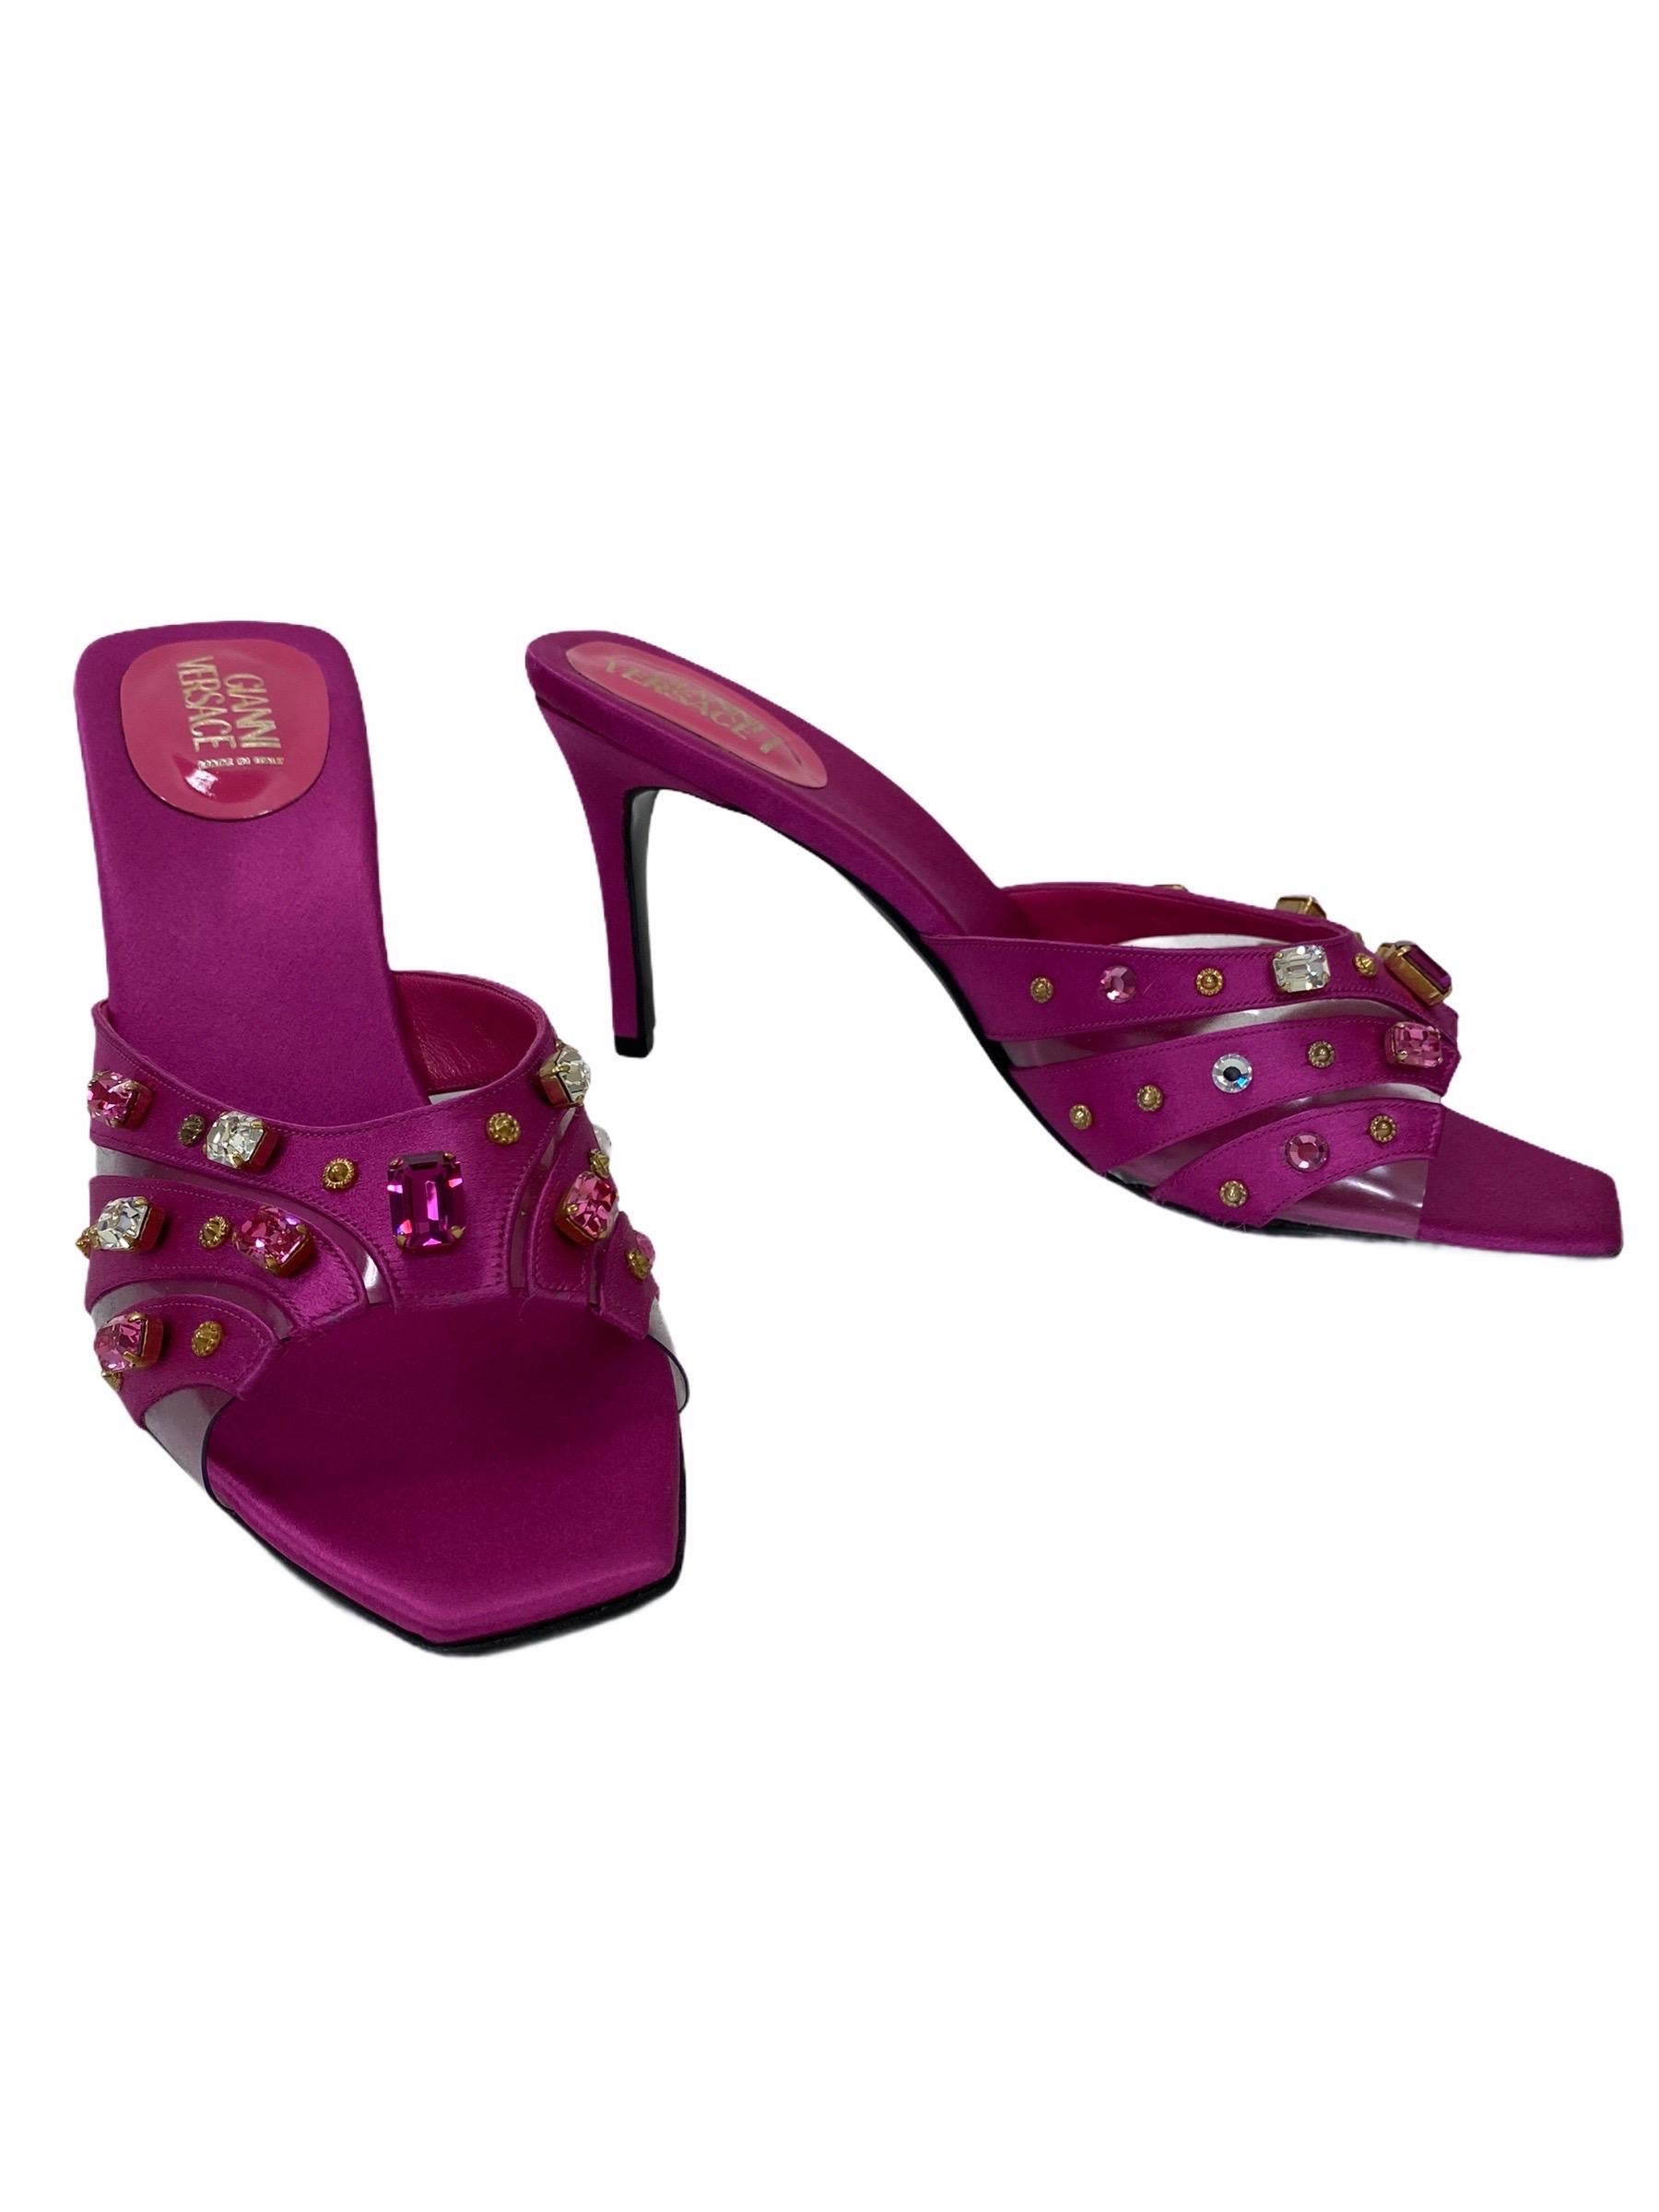 S/S 2000 Vintage Gianni Versace Crystal Embellished Pink Sandals 39.5 – 9.5 NWT For Sale 3